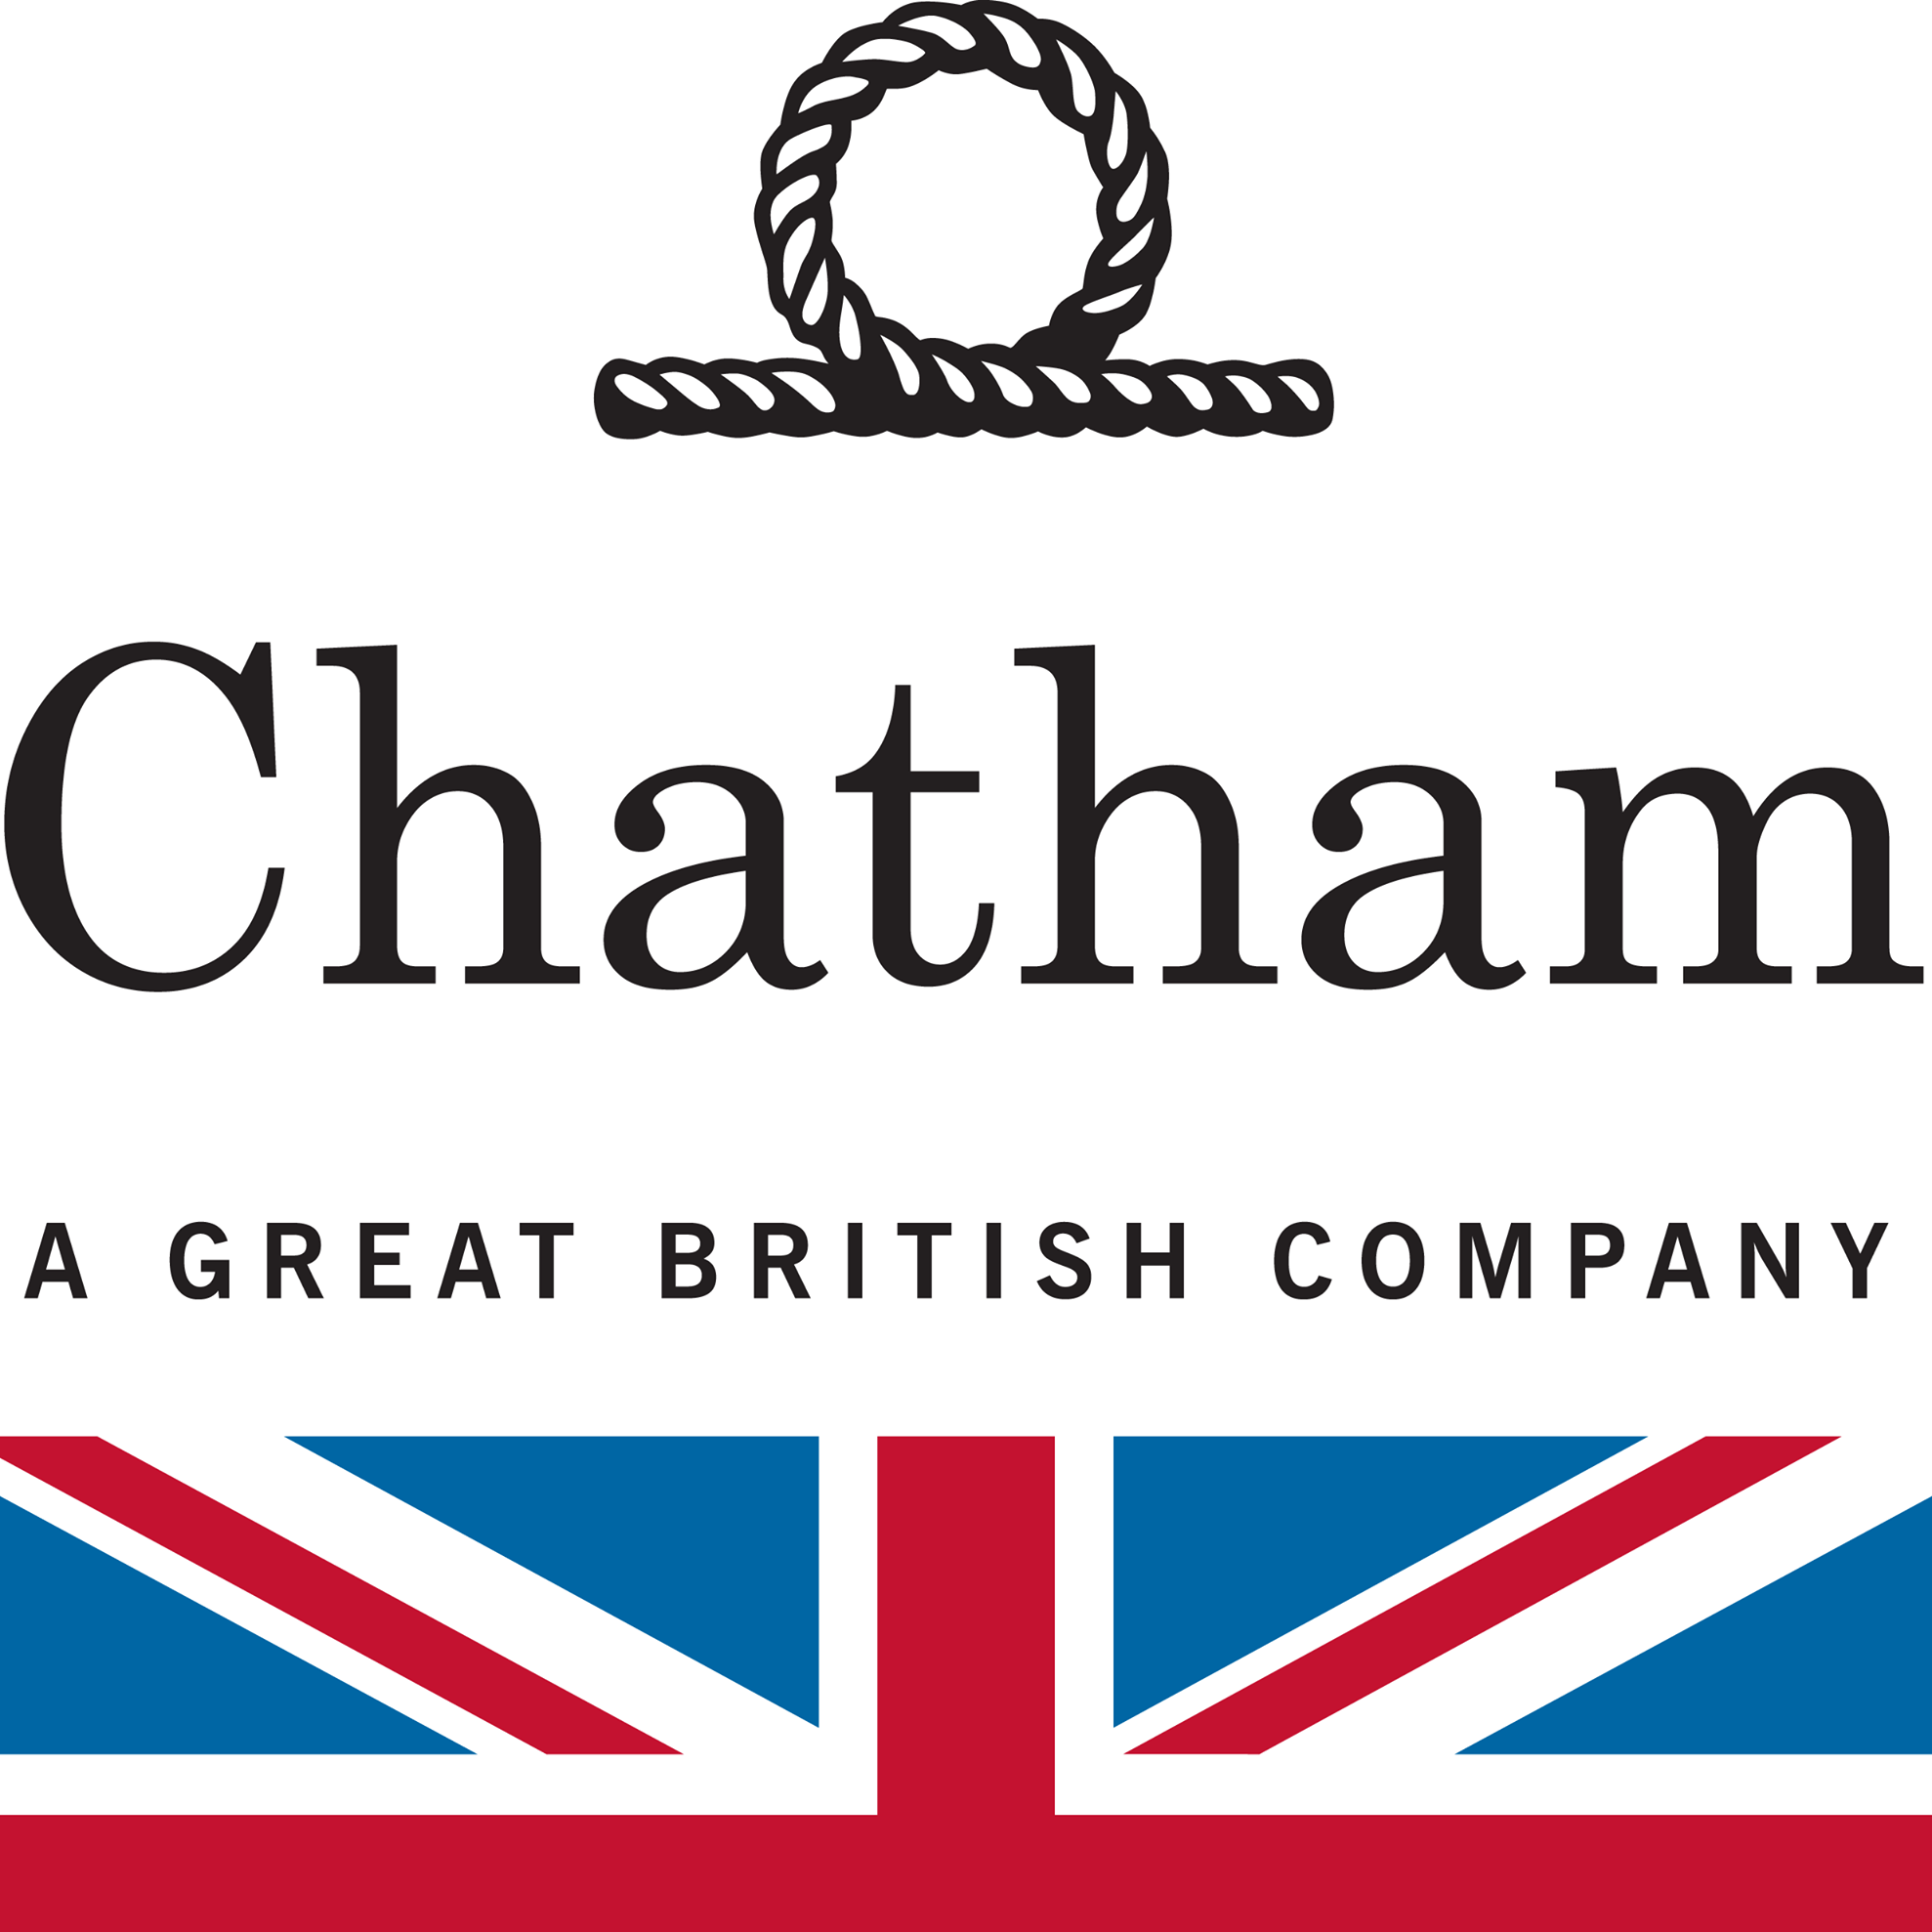 Chatham brand logo